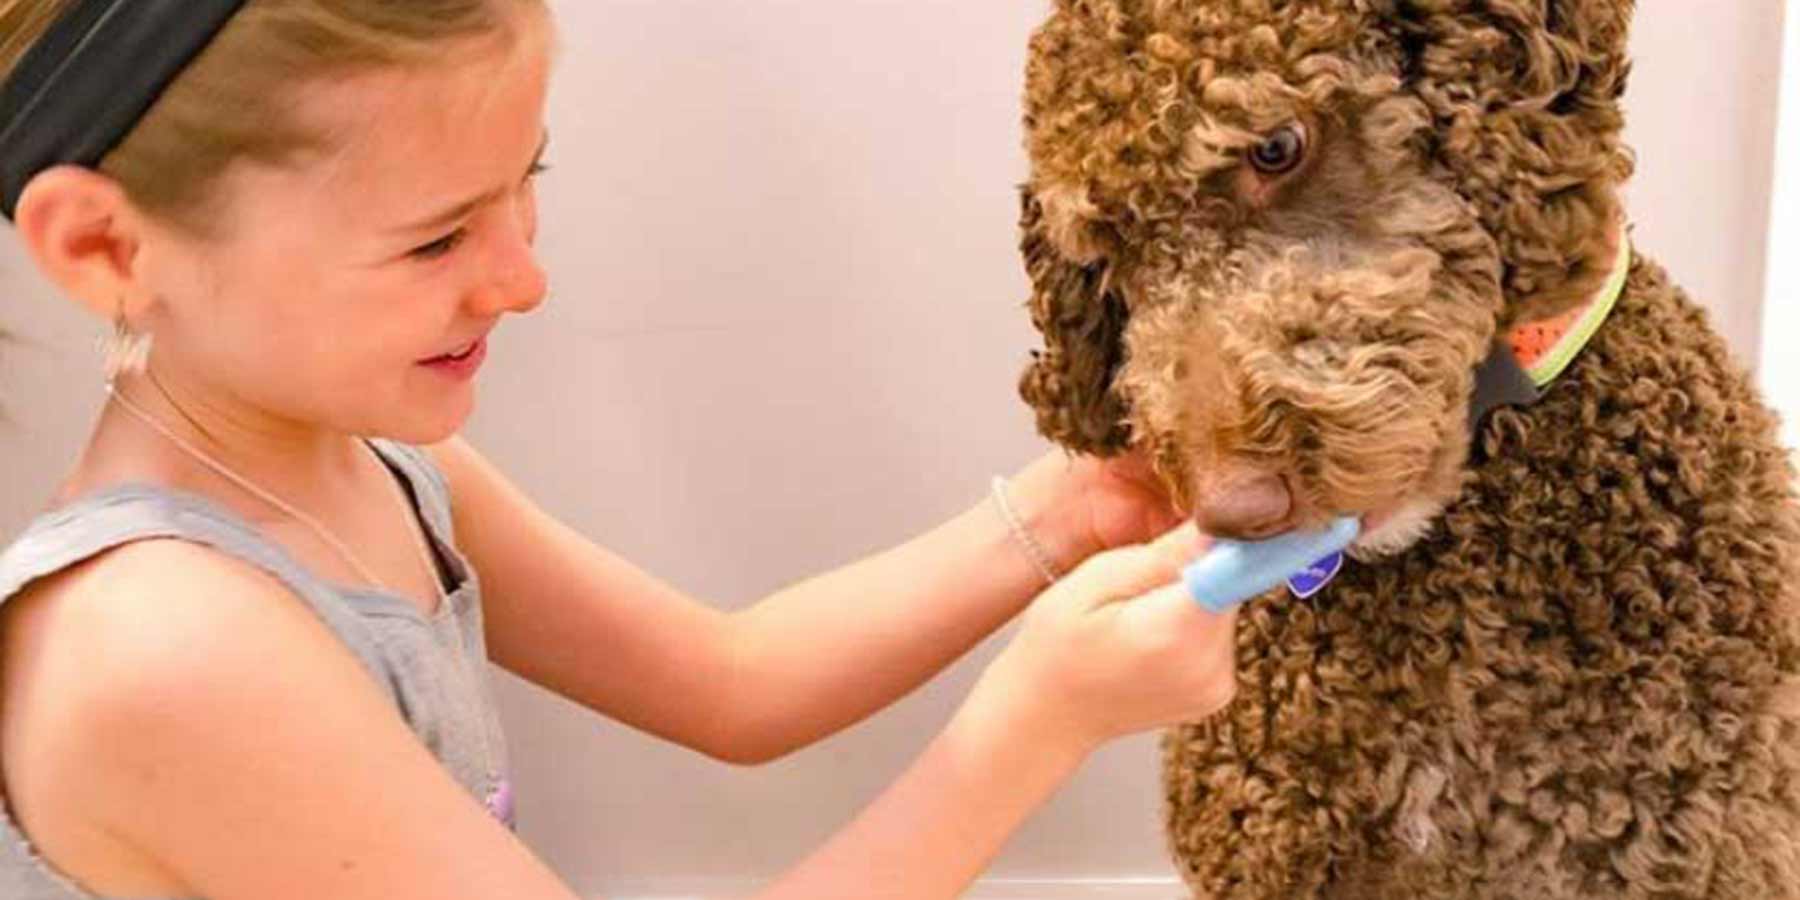 Social-Media-Post-From-Instagram-User-PDKmiathedoodette-girl-brushing-her-dogs-teeth-with-oxyfresh-finger-toothbrush-for-dogs